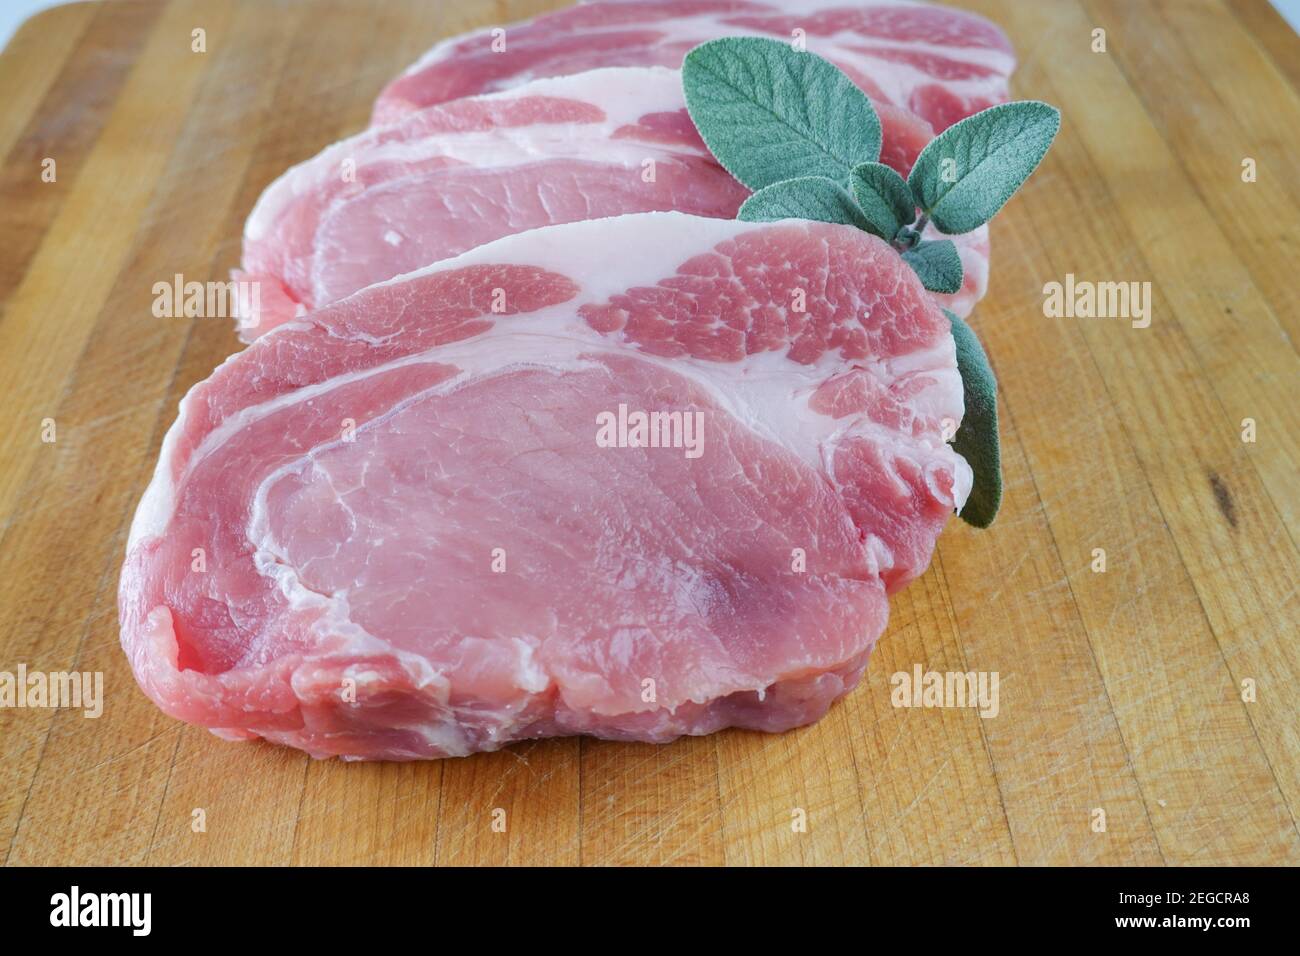 Raw boneless loin Pork chops on a wood kitchen cutting board Stock Photo